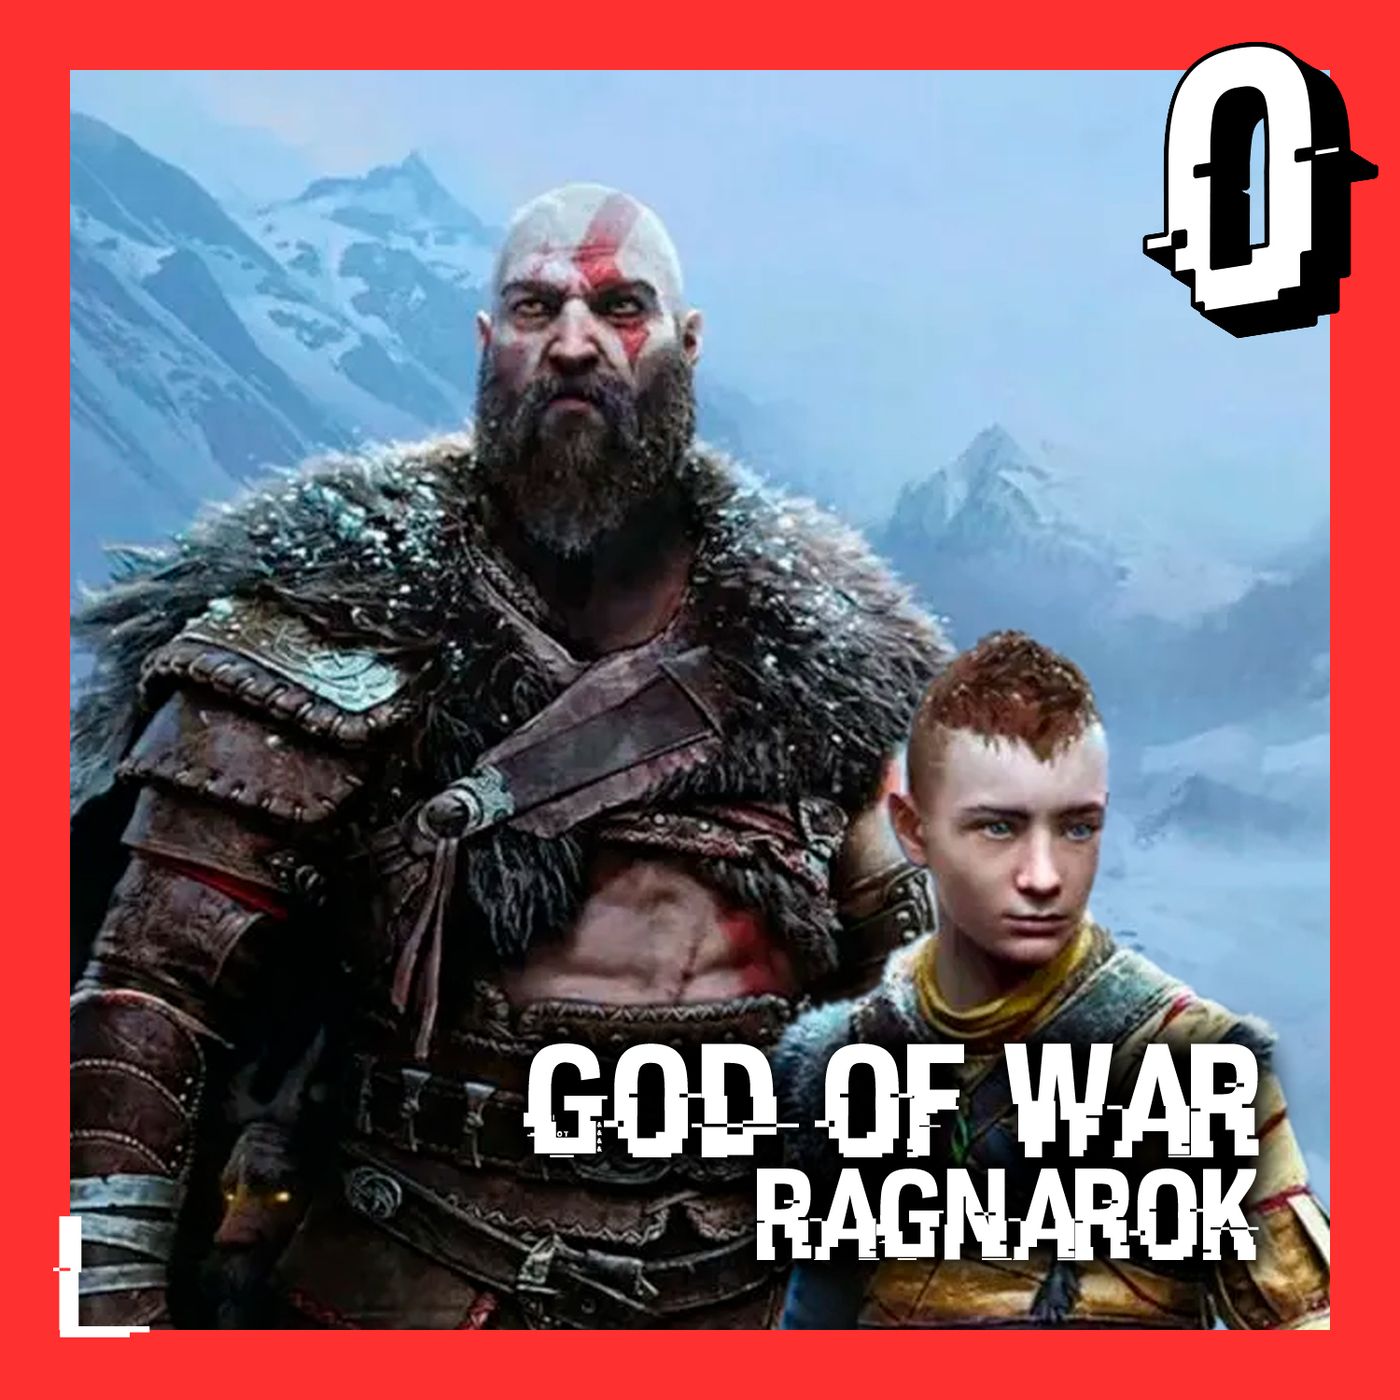 44- God of War: Ragnarok: Vivir en la montaña